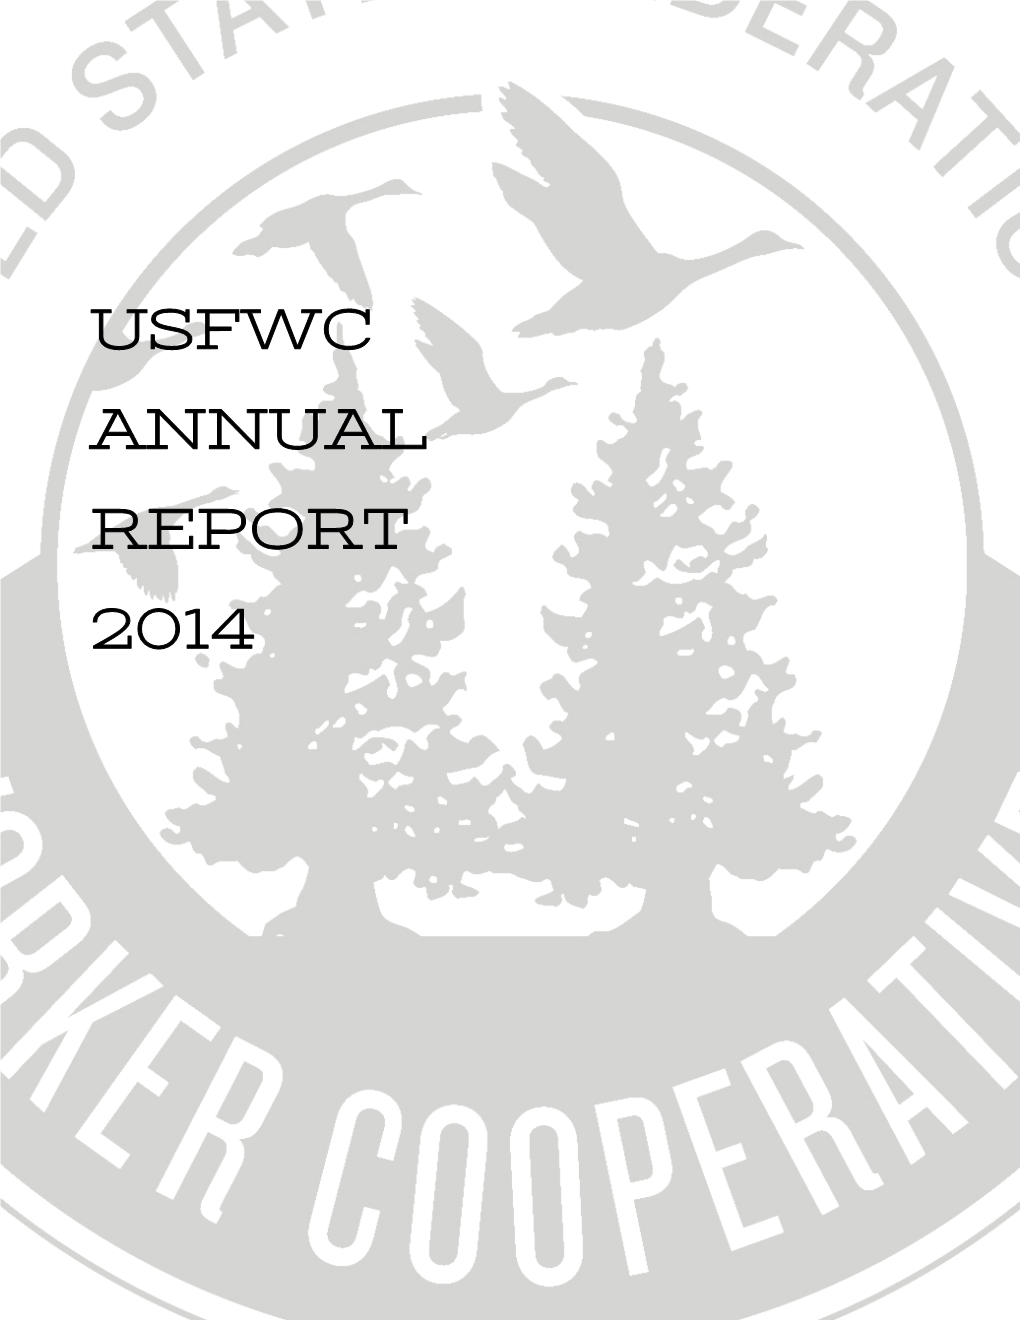 Usfwc Annual Report 2014